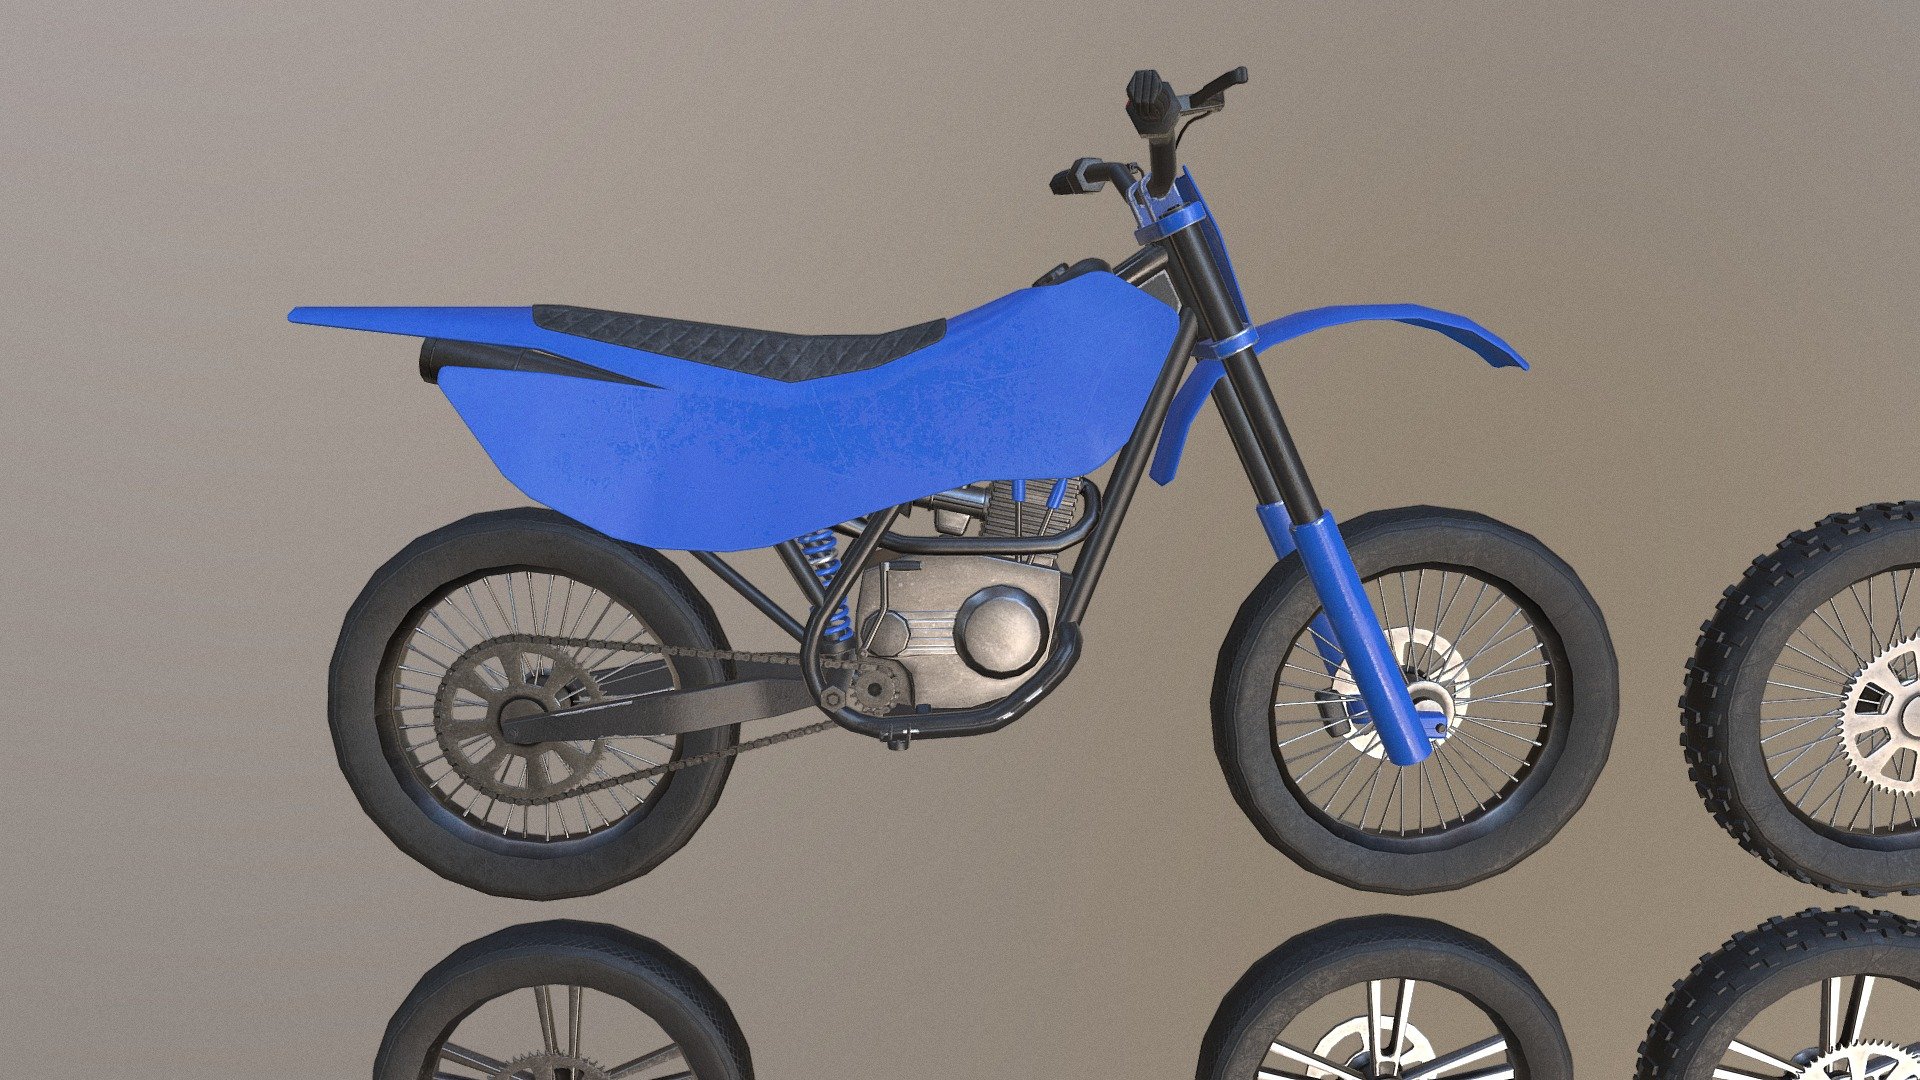 Modular Dirt Bike